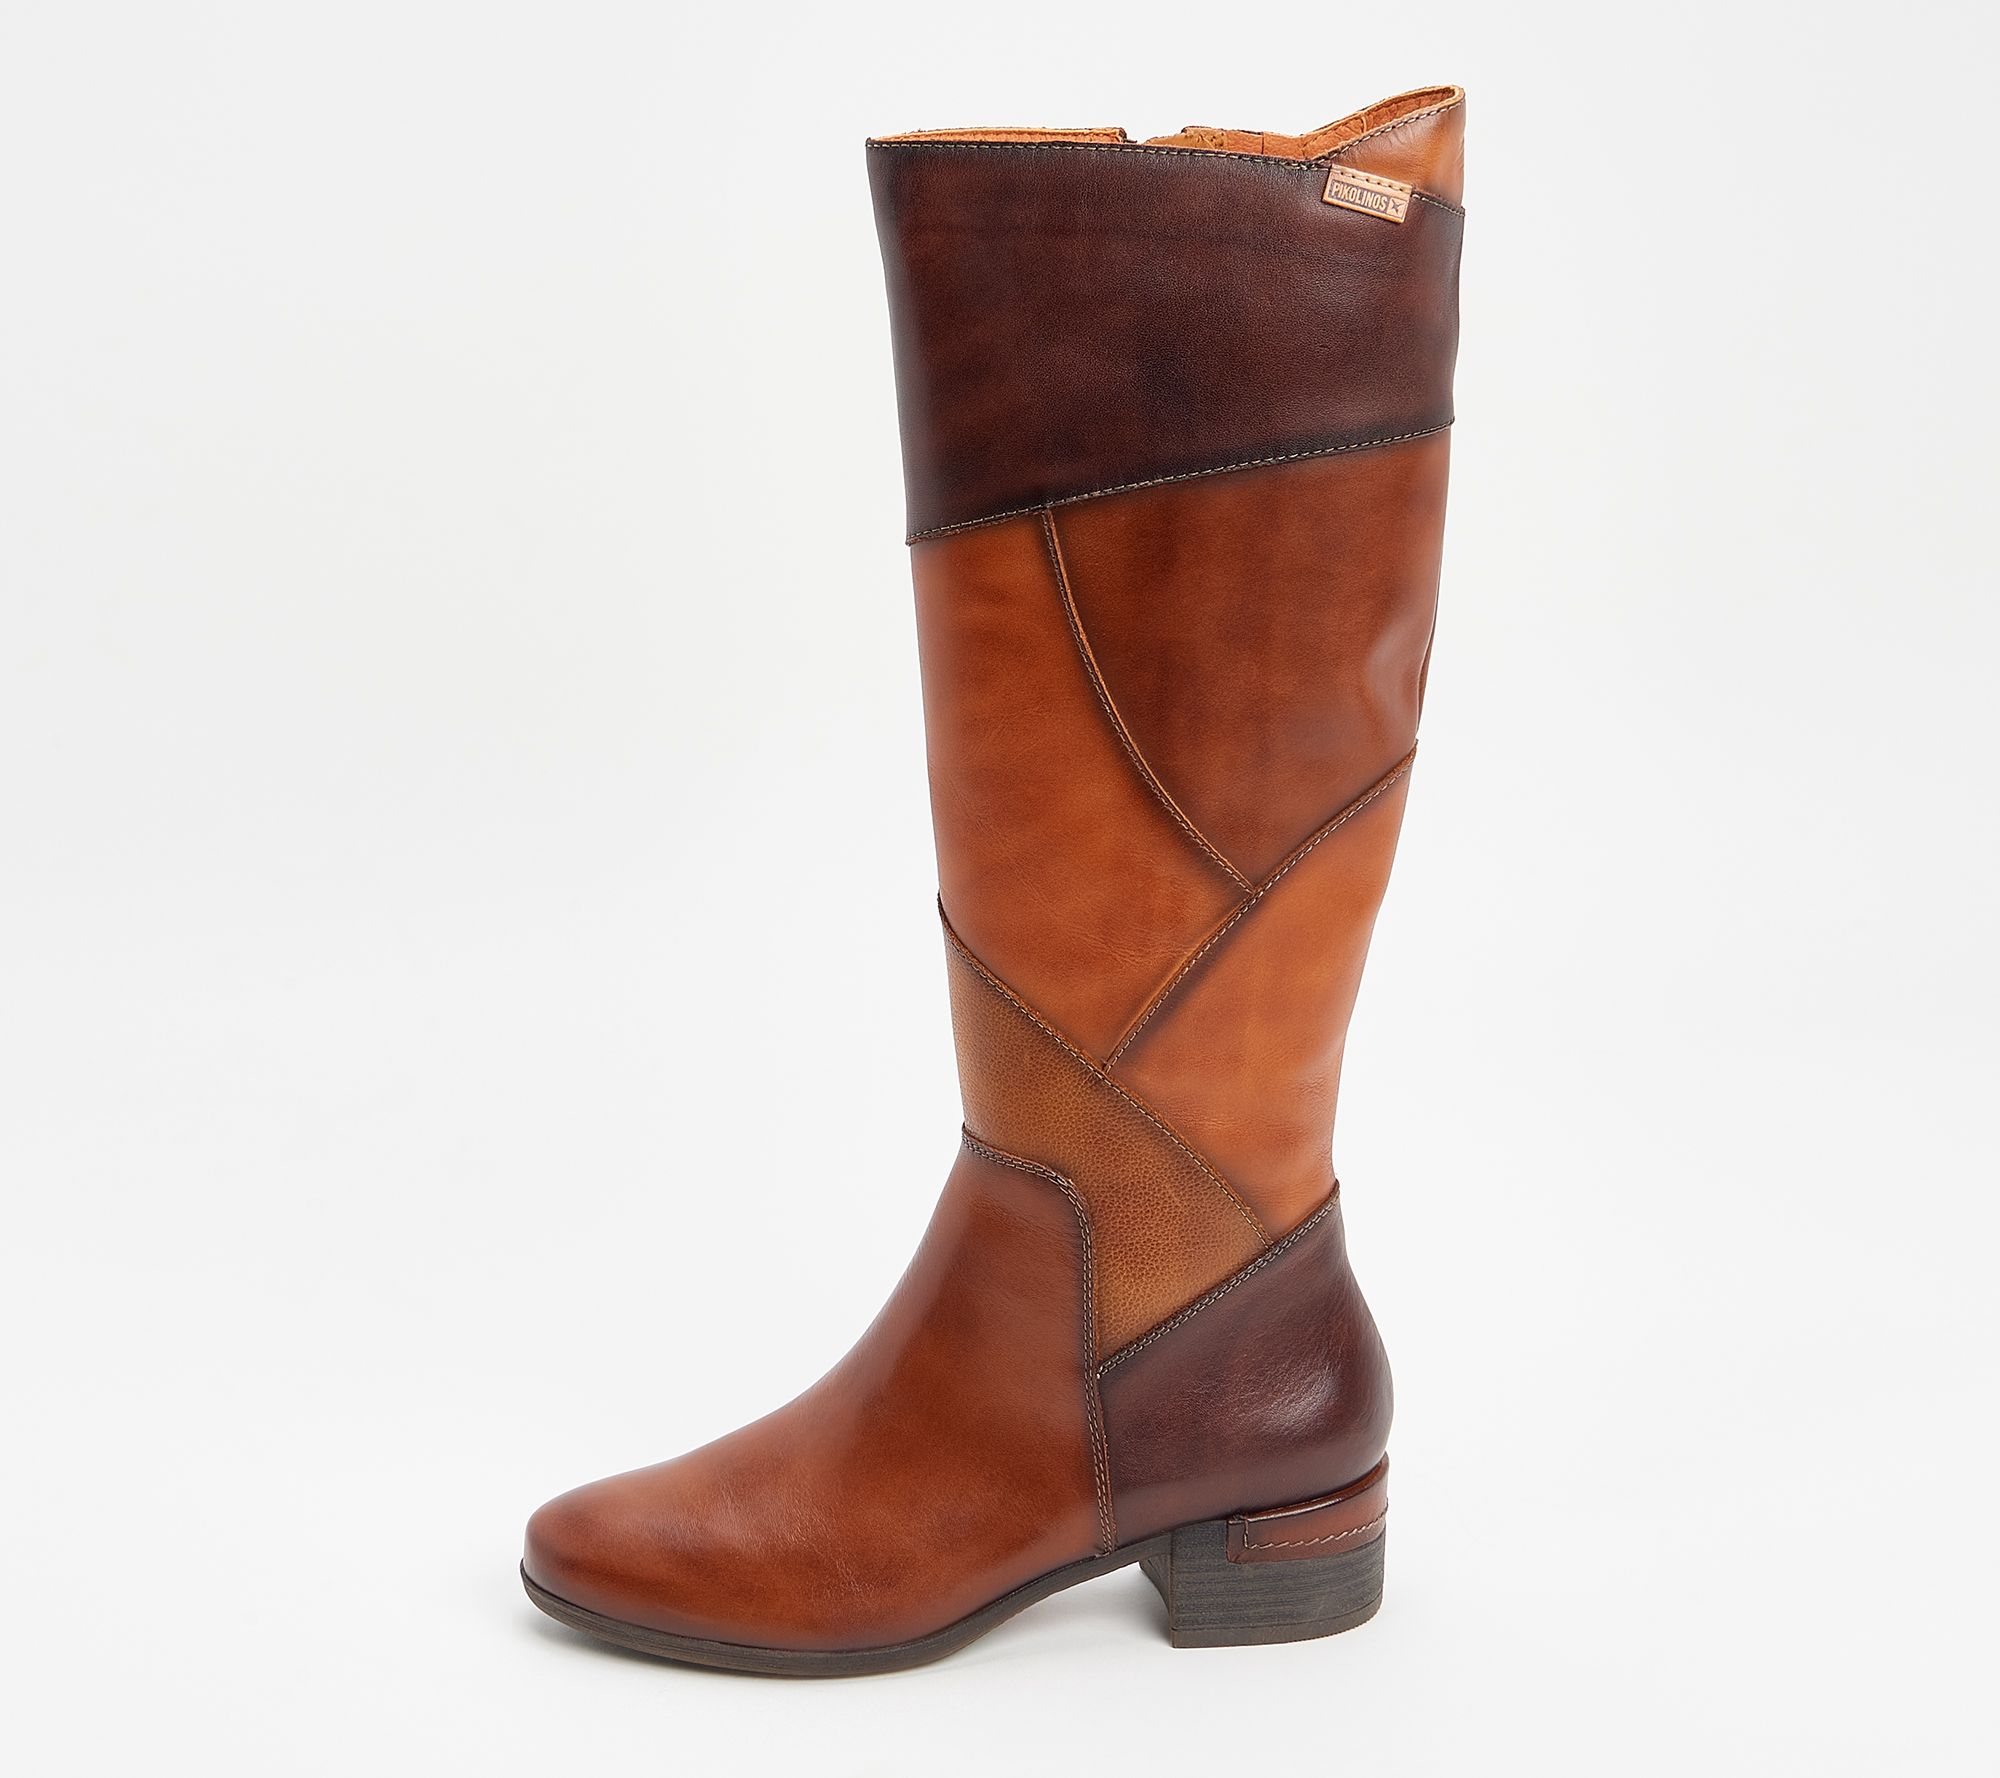 Pikolinos Leather Tall Shaft Boots - Malaga - QVC.com